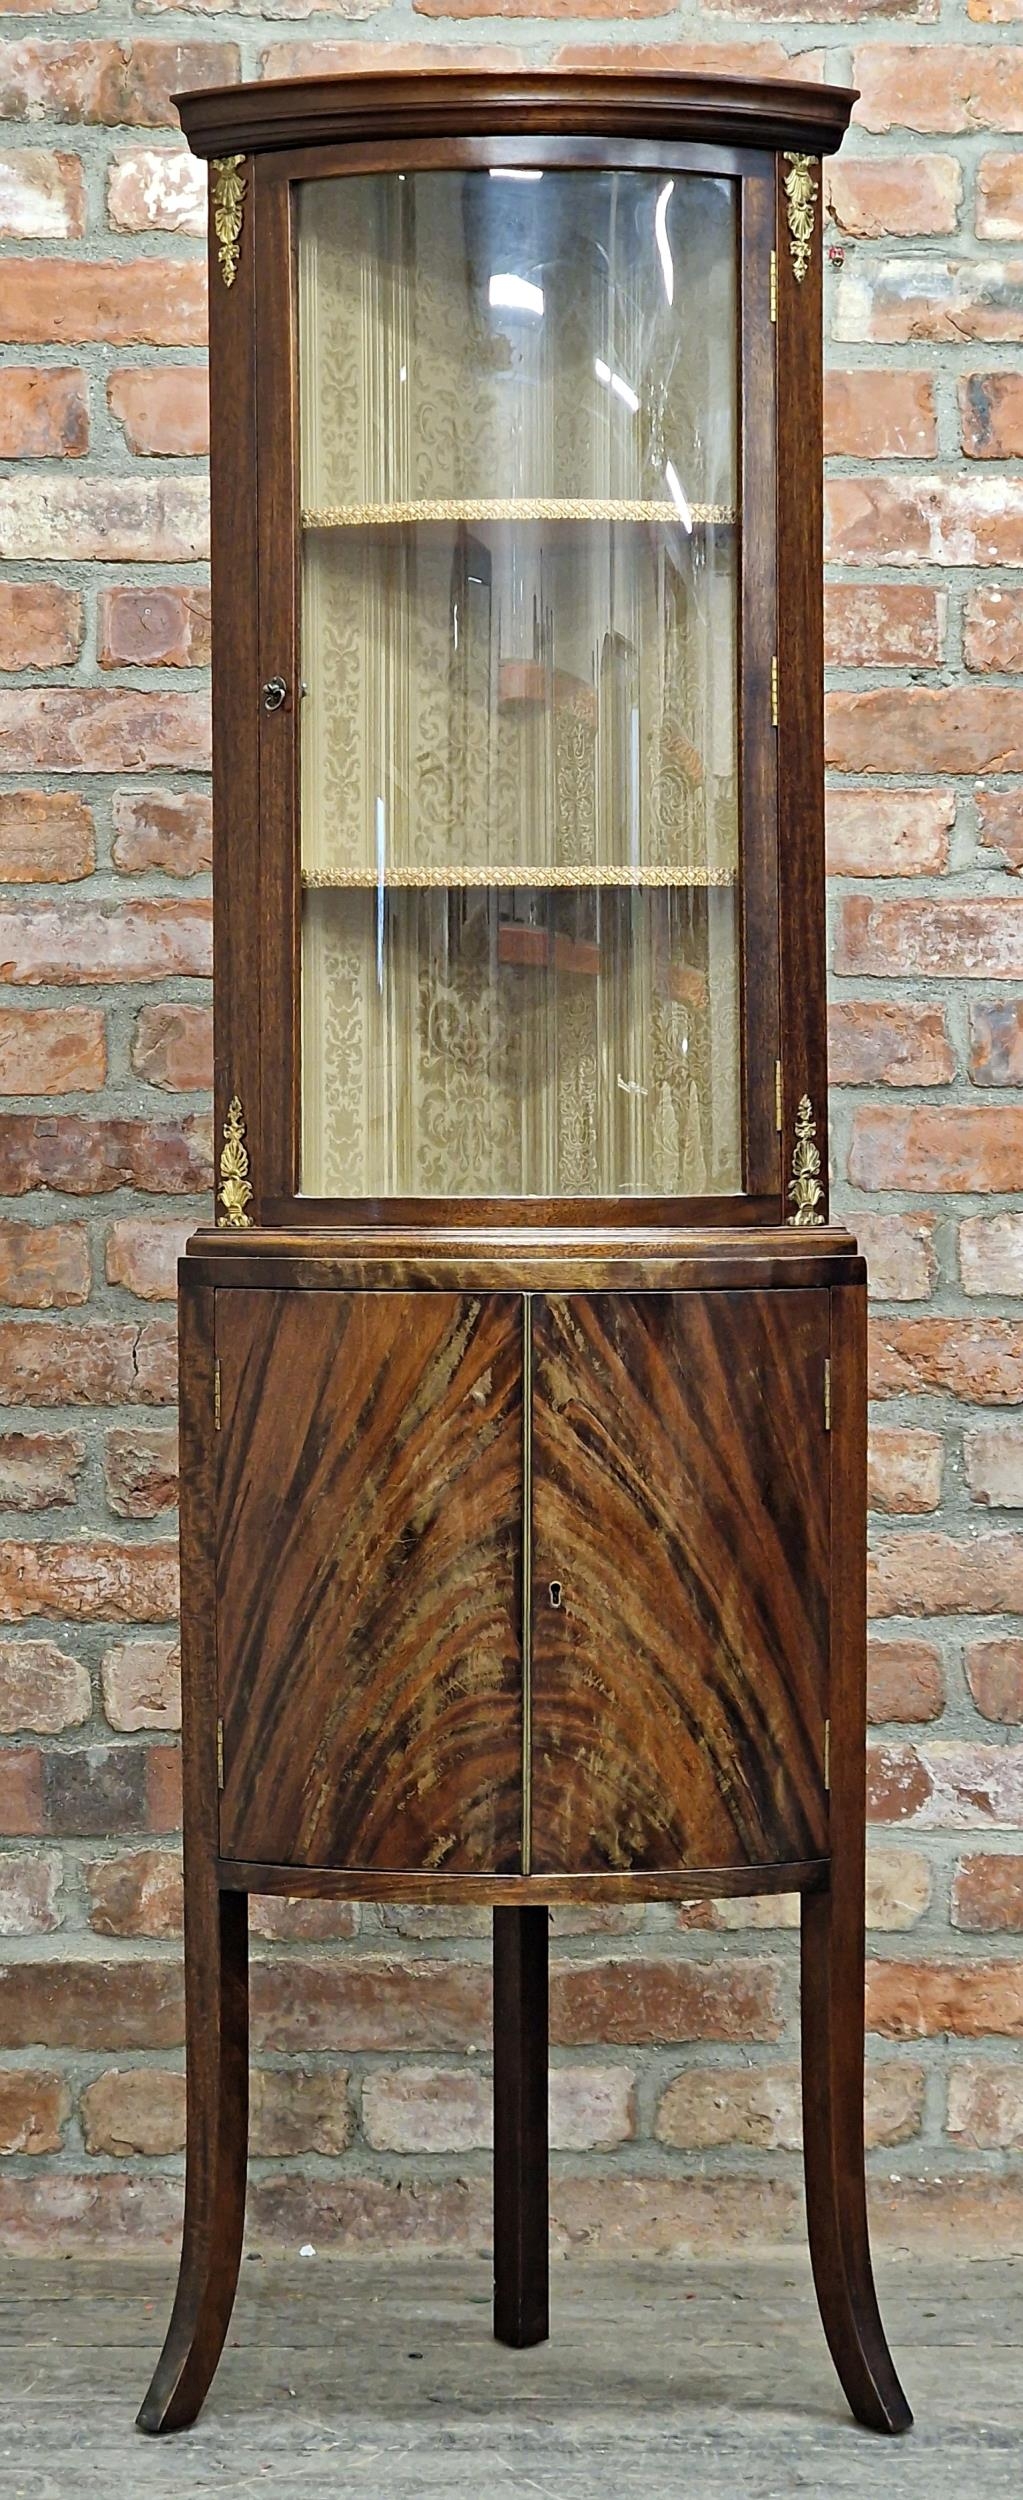 Mahogany bow front corner display cabinet, H 172cm